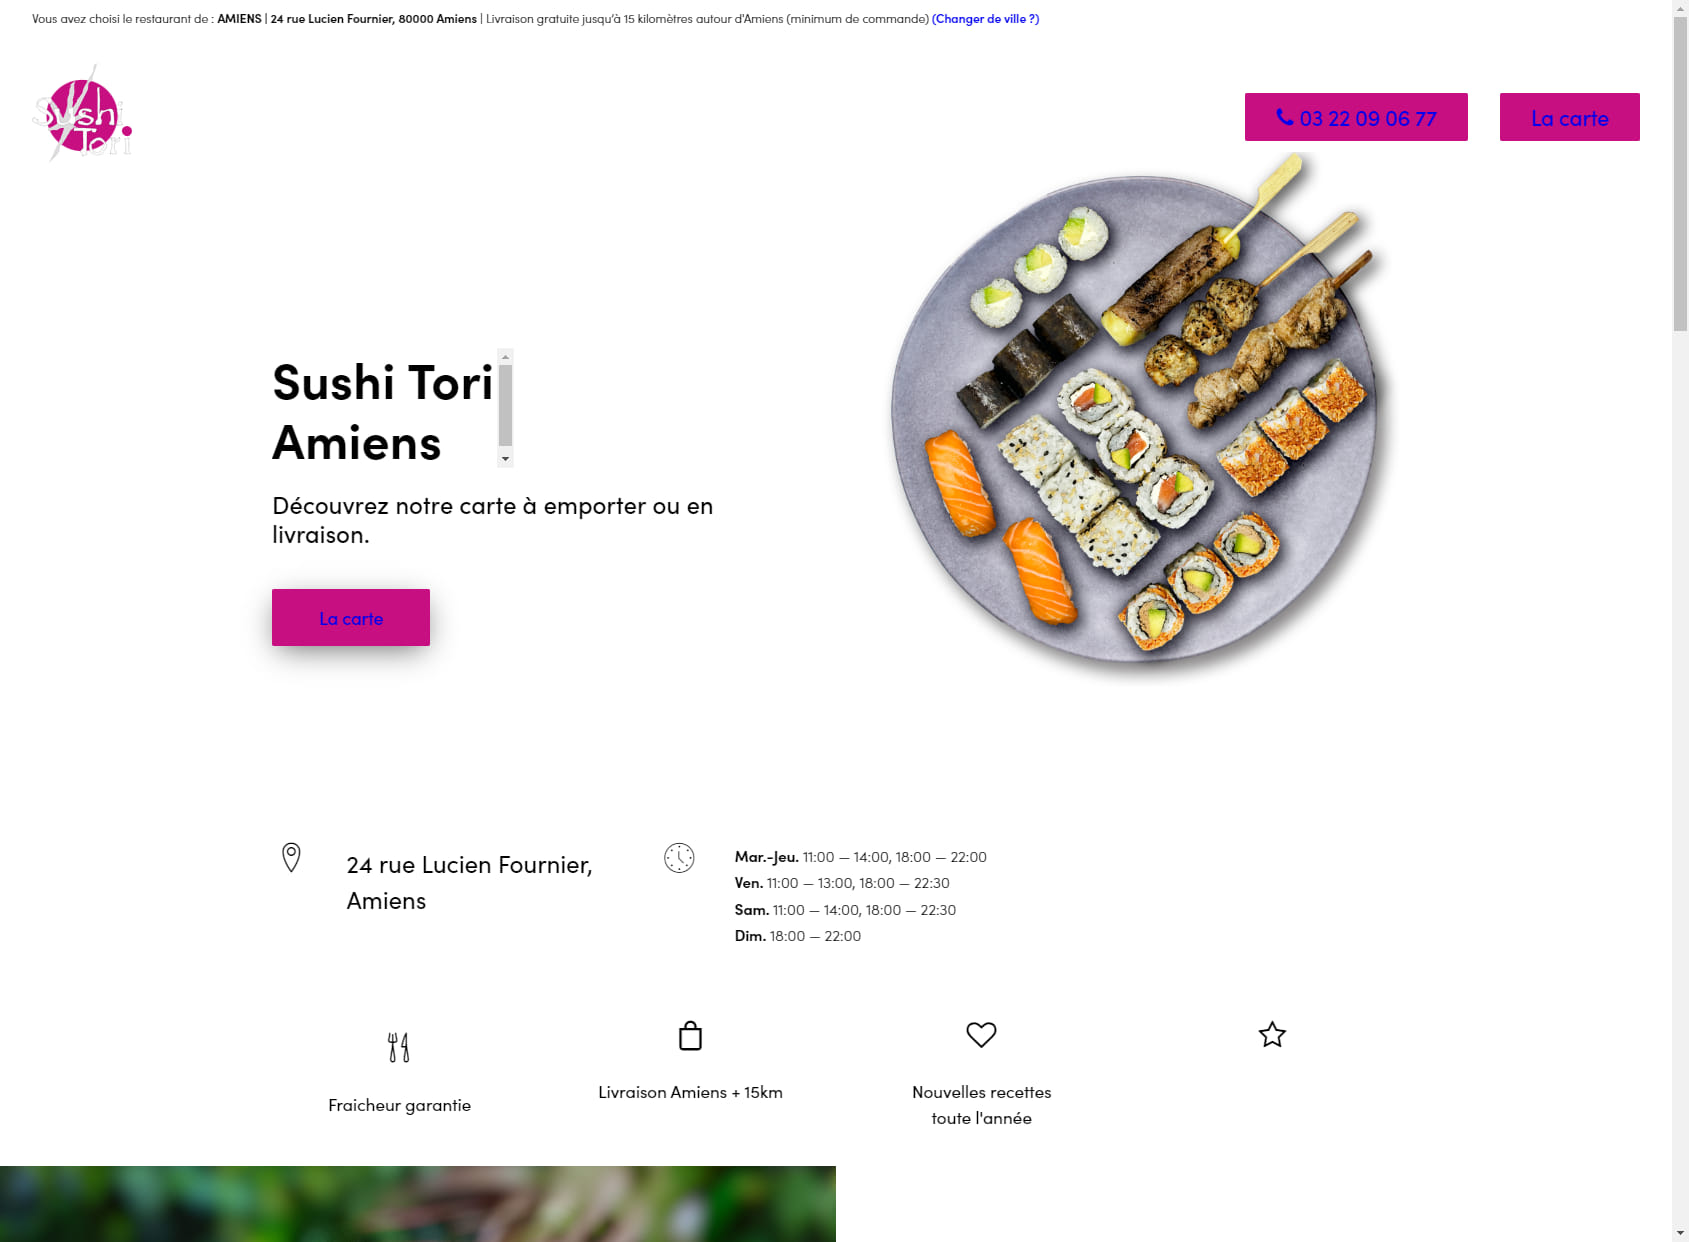 Sushi Tori Amiens